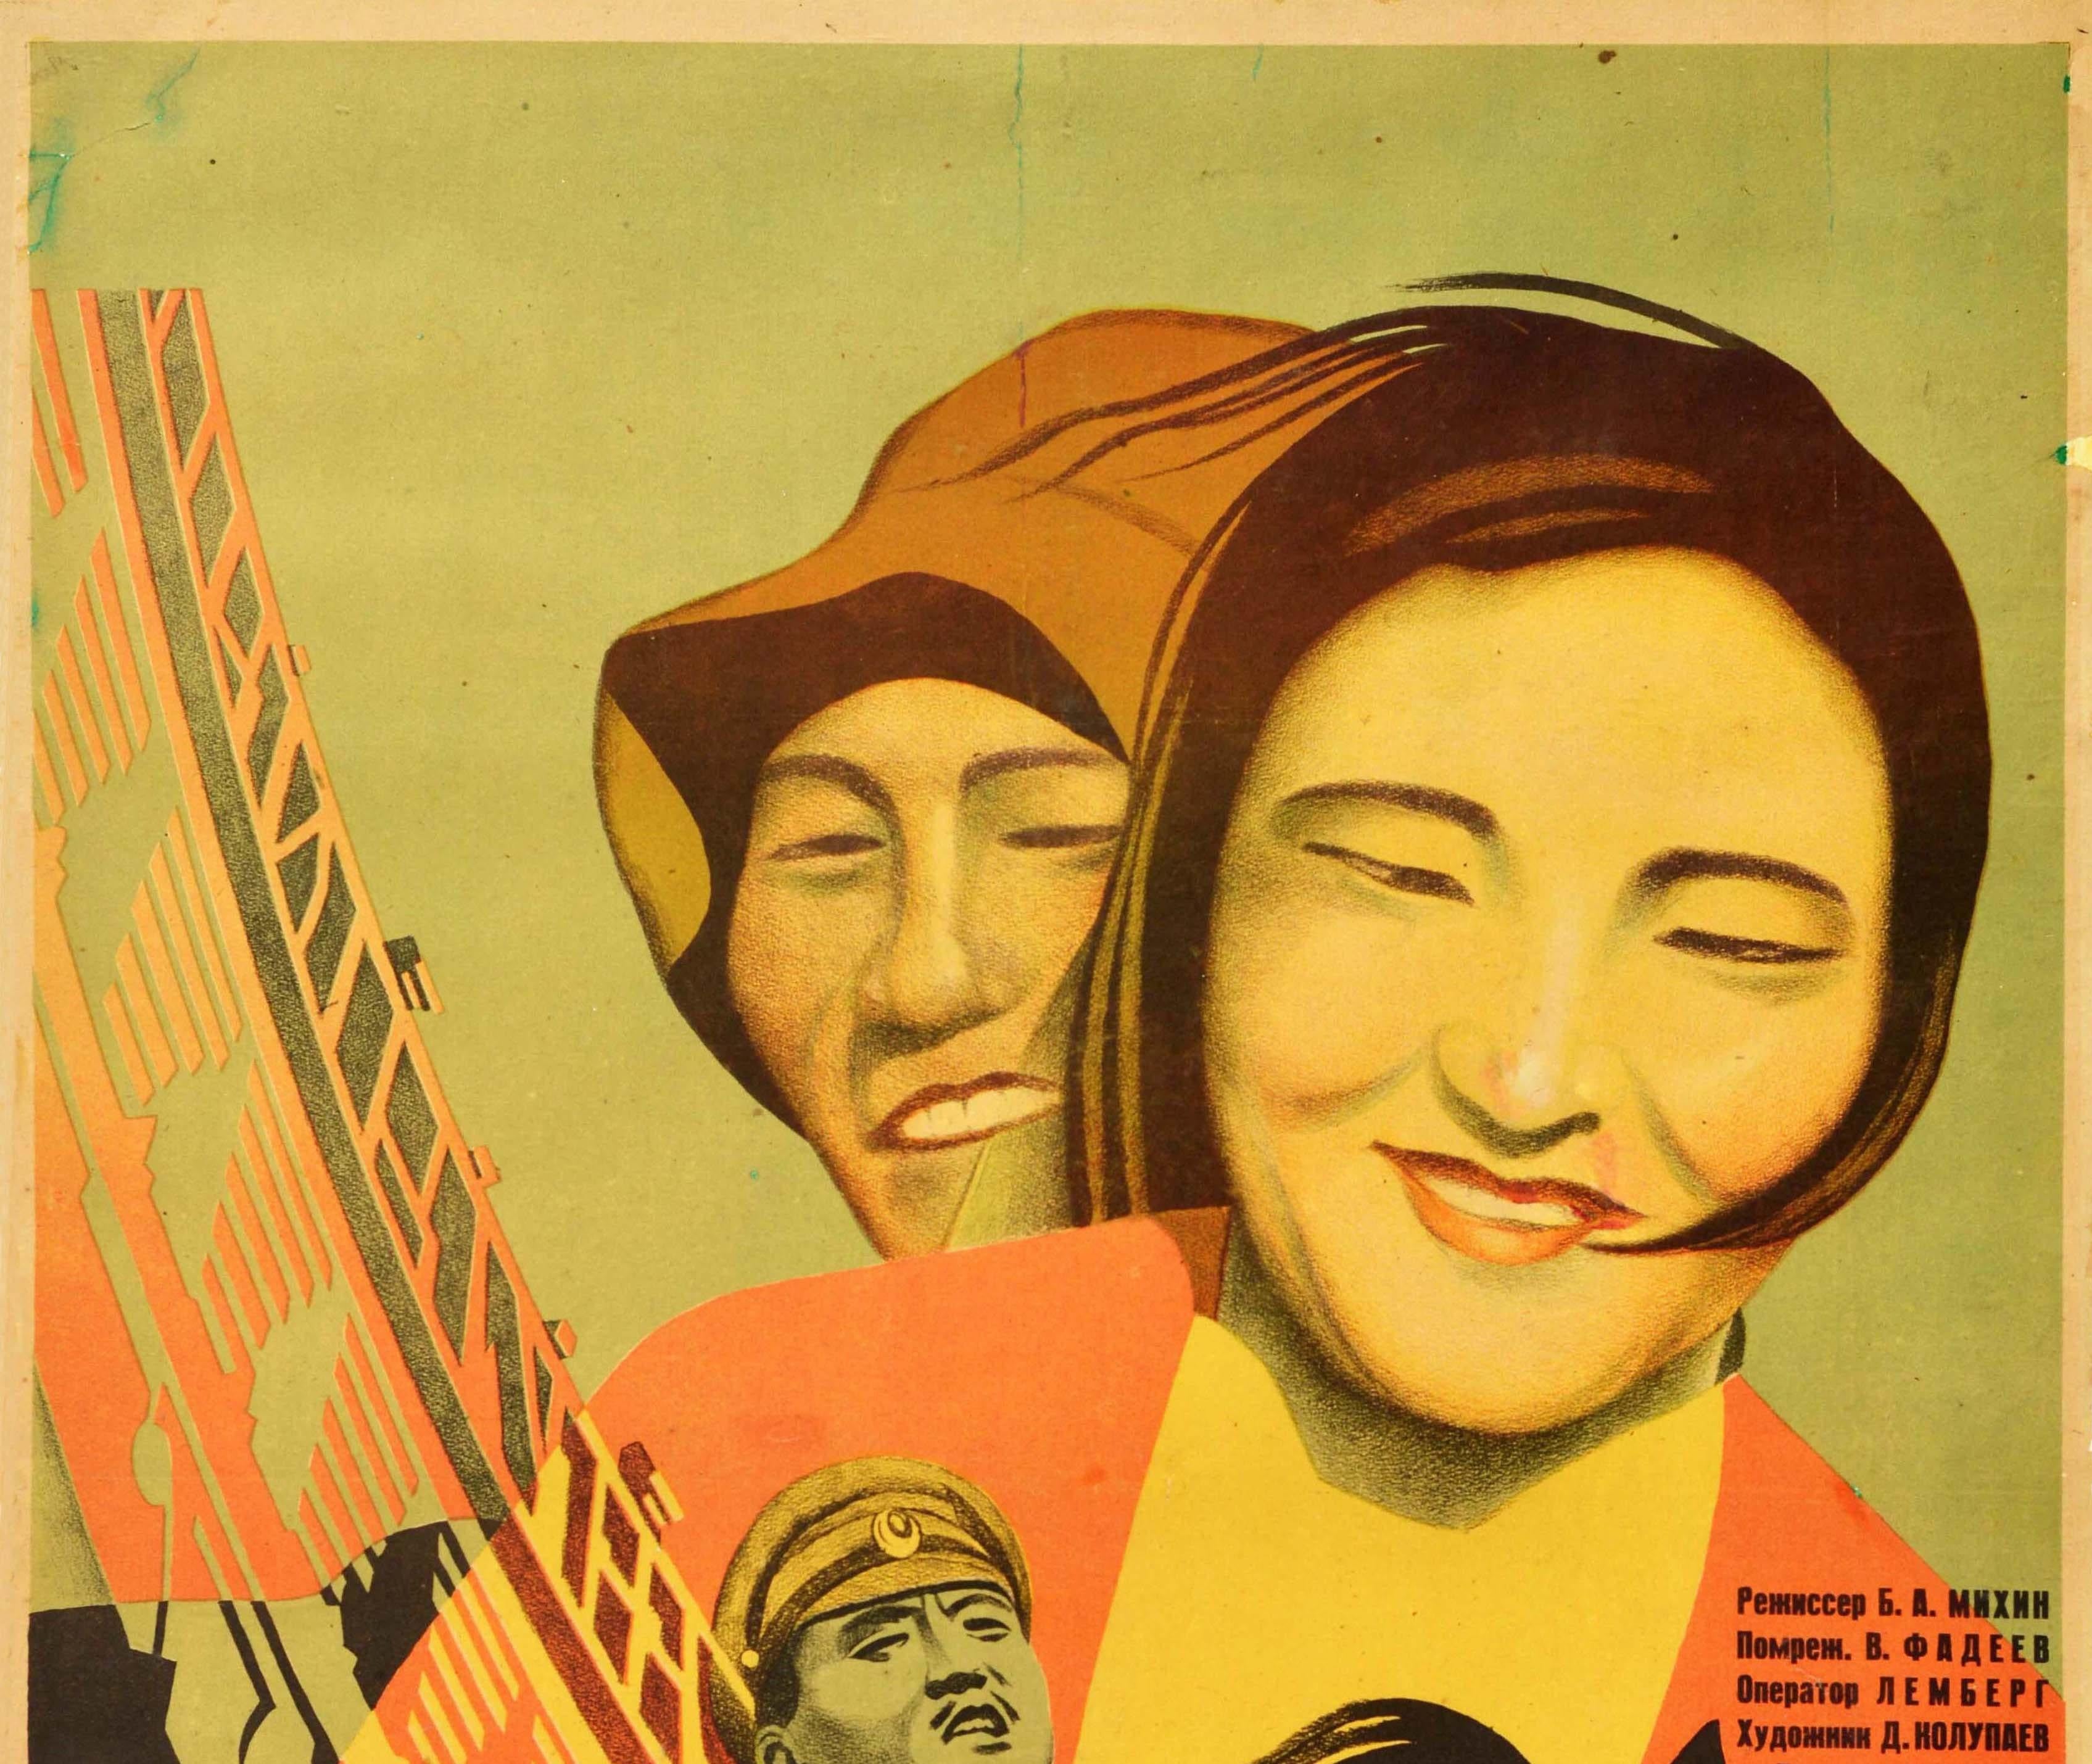 Original Vintage Film Poster Knyaz Tseren Prince Tseren Constructivist Movie Art - Print by I Gerasimovich